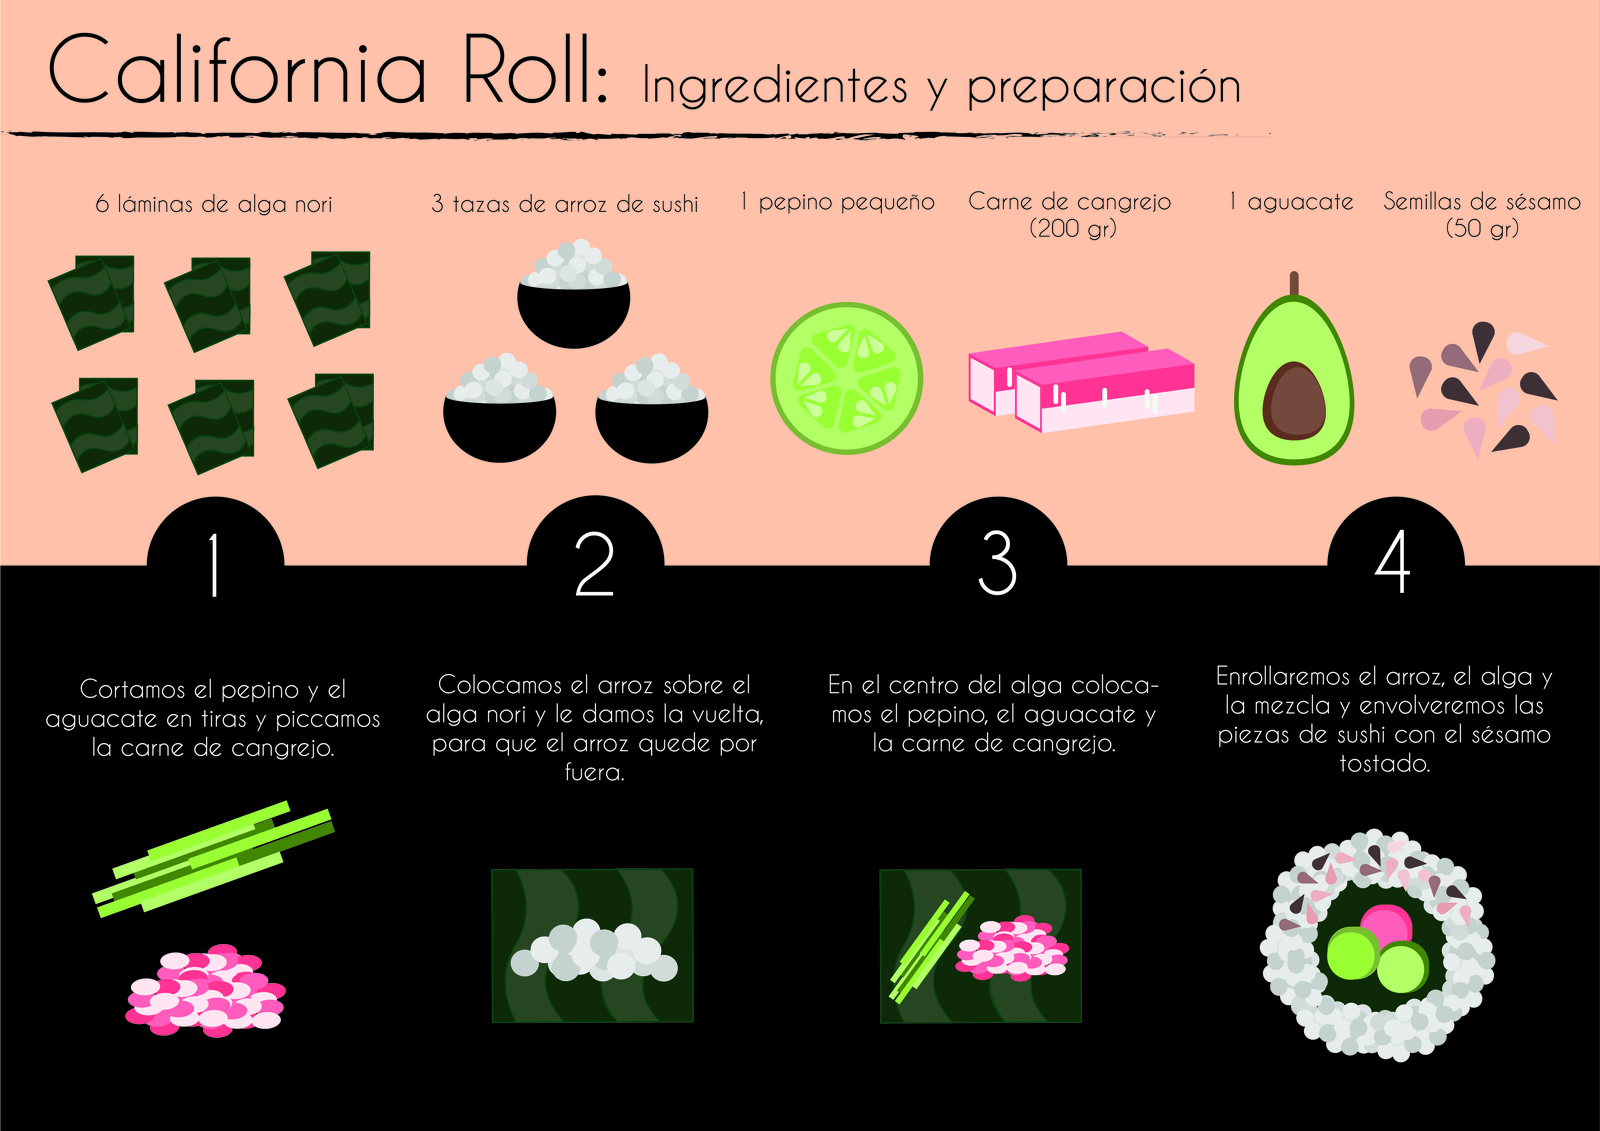 California Roll Recipe by Ainara Martínez on Dribbble